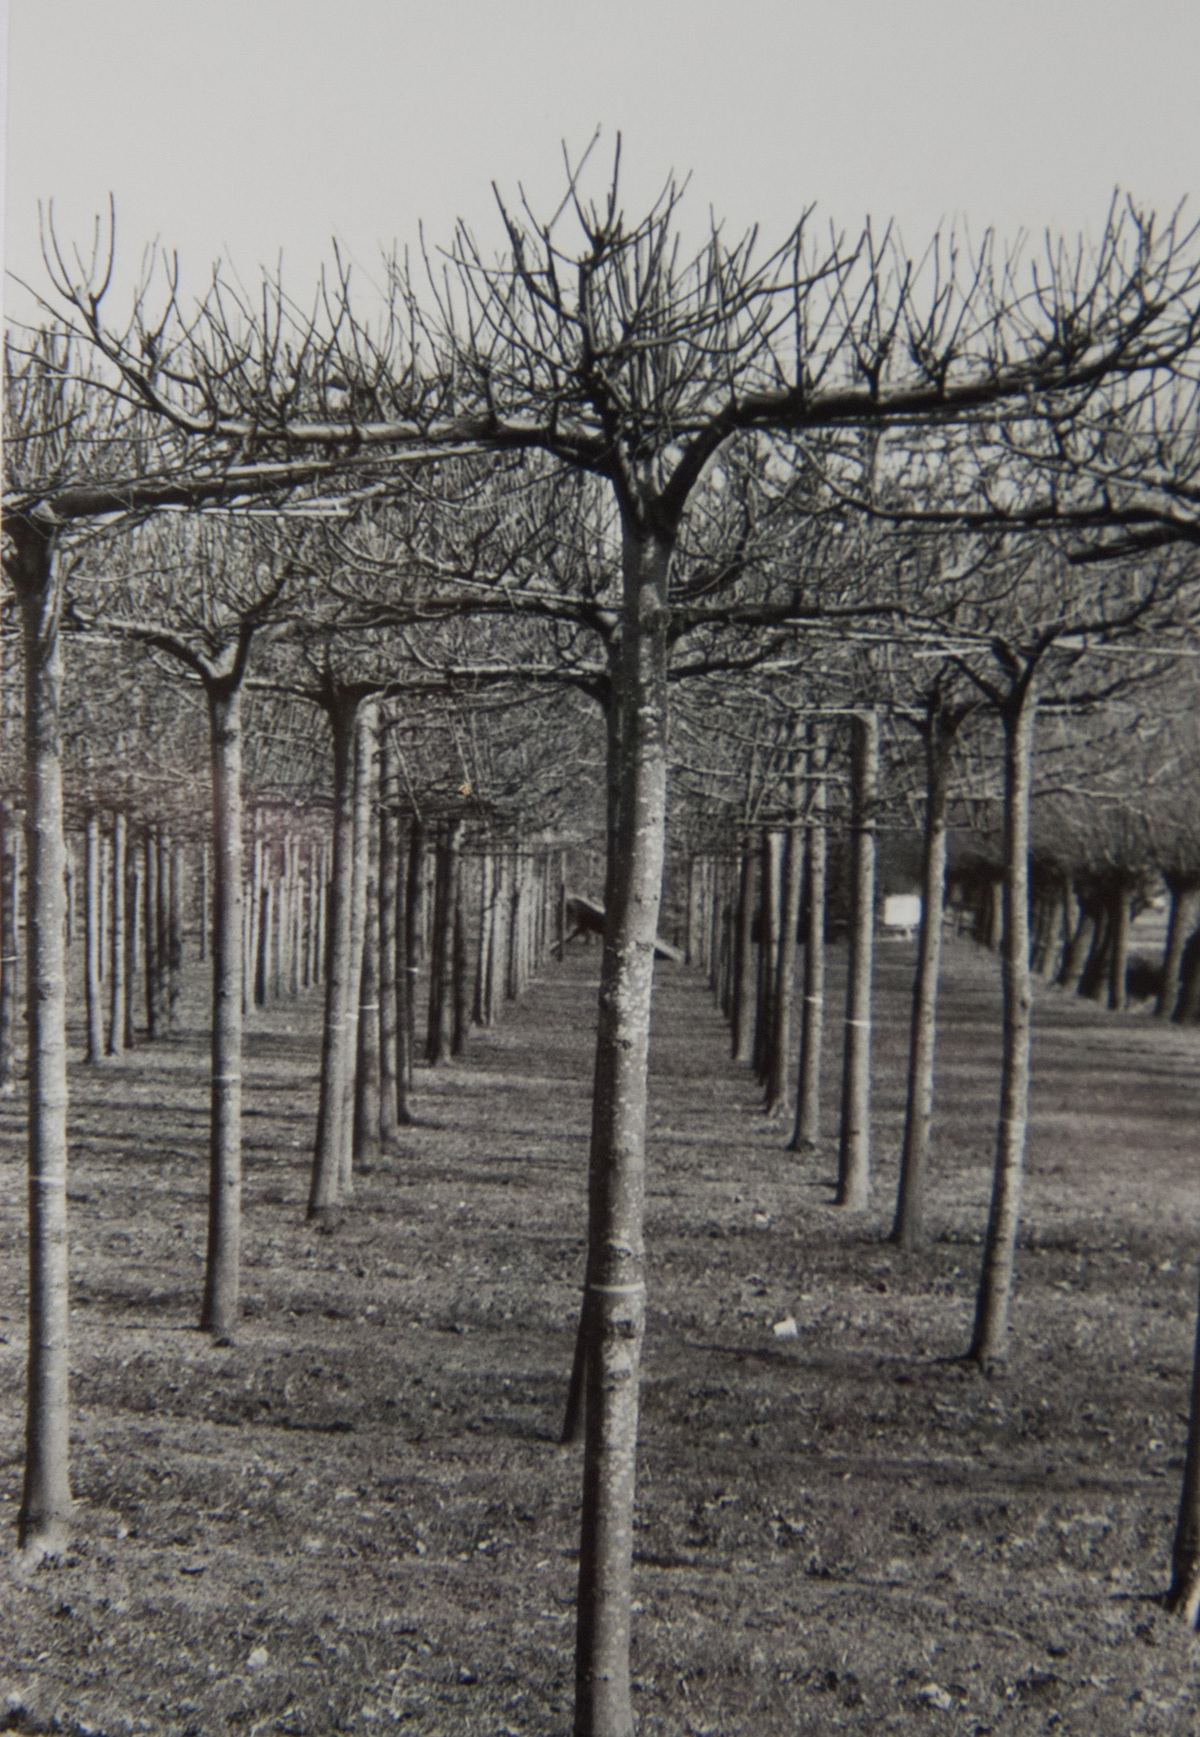 Nature trees industrial analog analog photography analog photos Analoog black and white paper